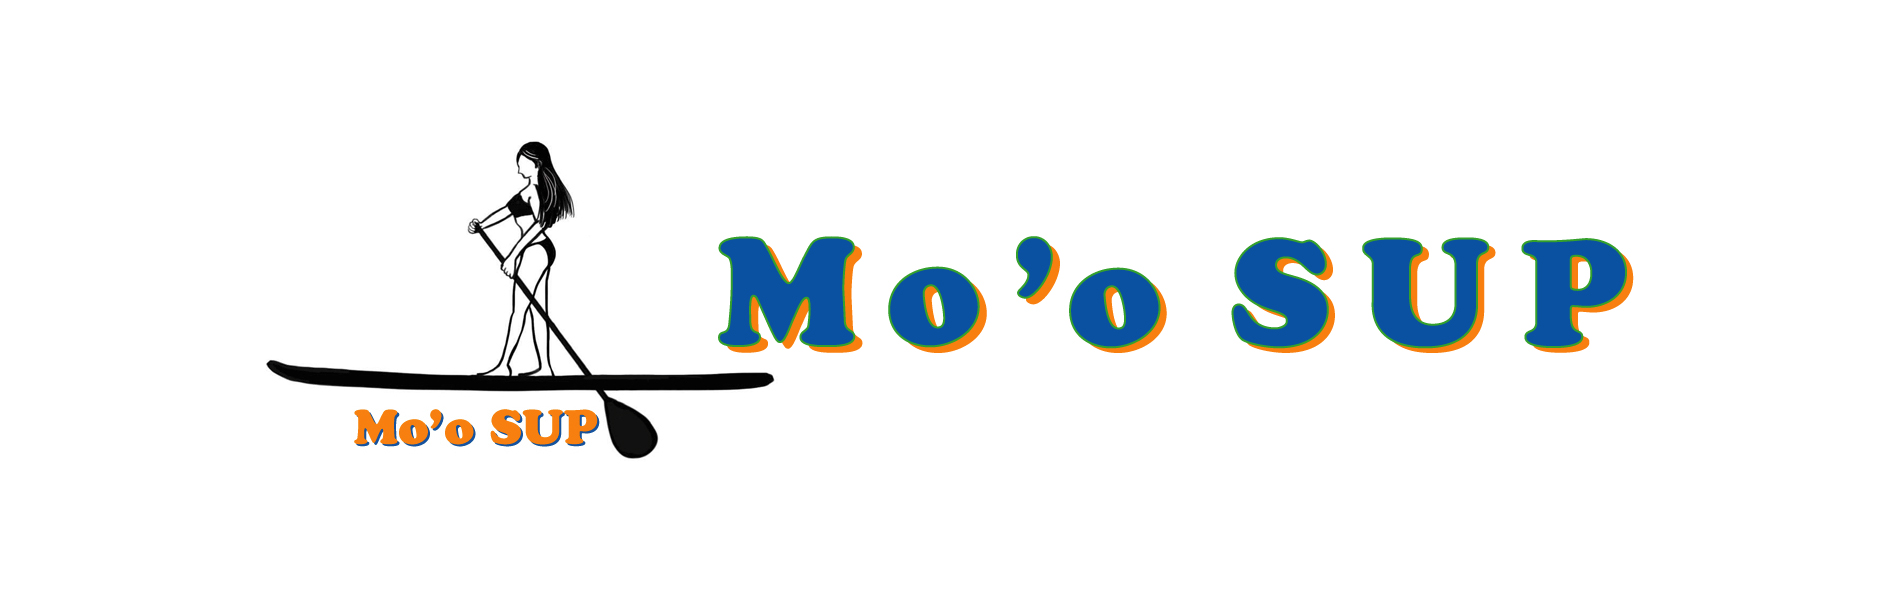 Mo'o SUP モオサップ宮古島のホームページ。